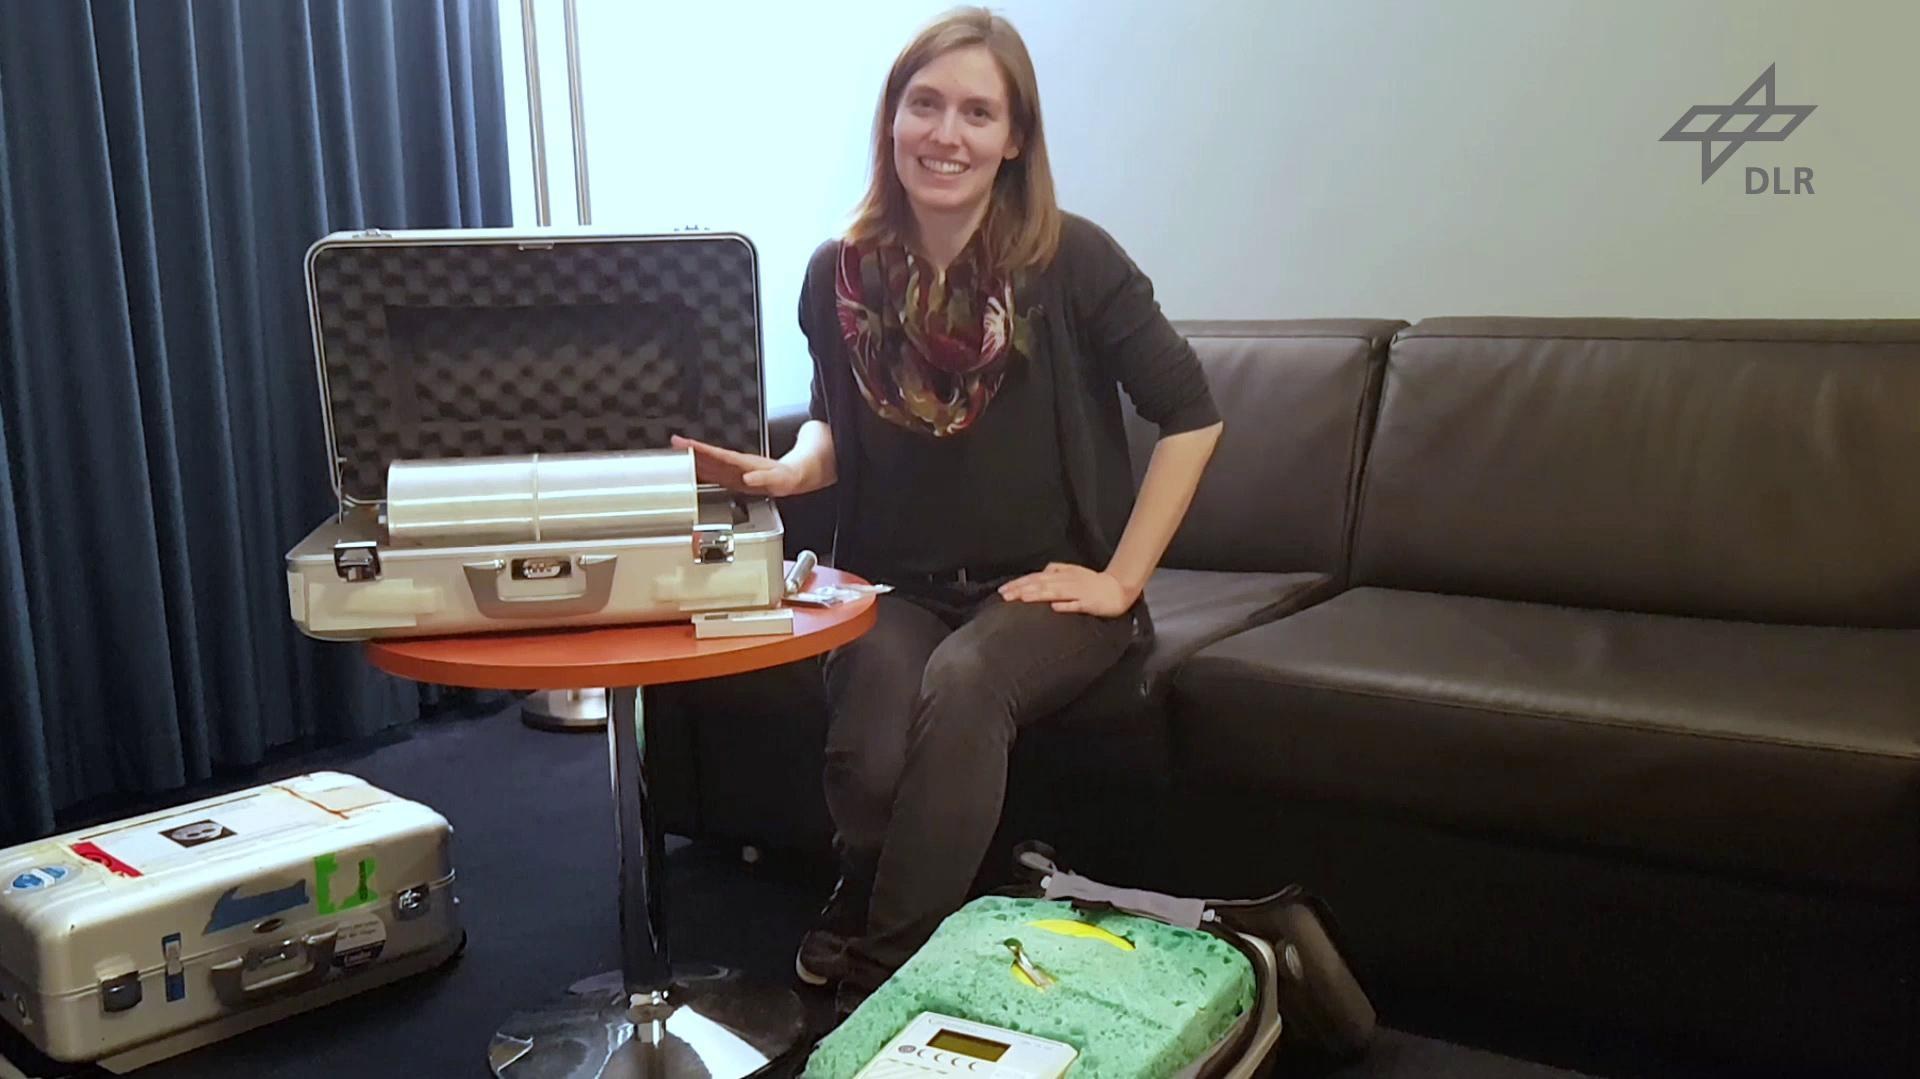 Video still: Atlantic Kiss mission: DLR scientist Mona C. Plettenberg presents the measuring instruments